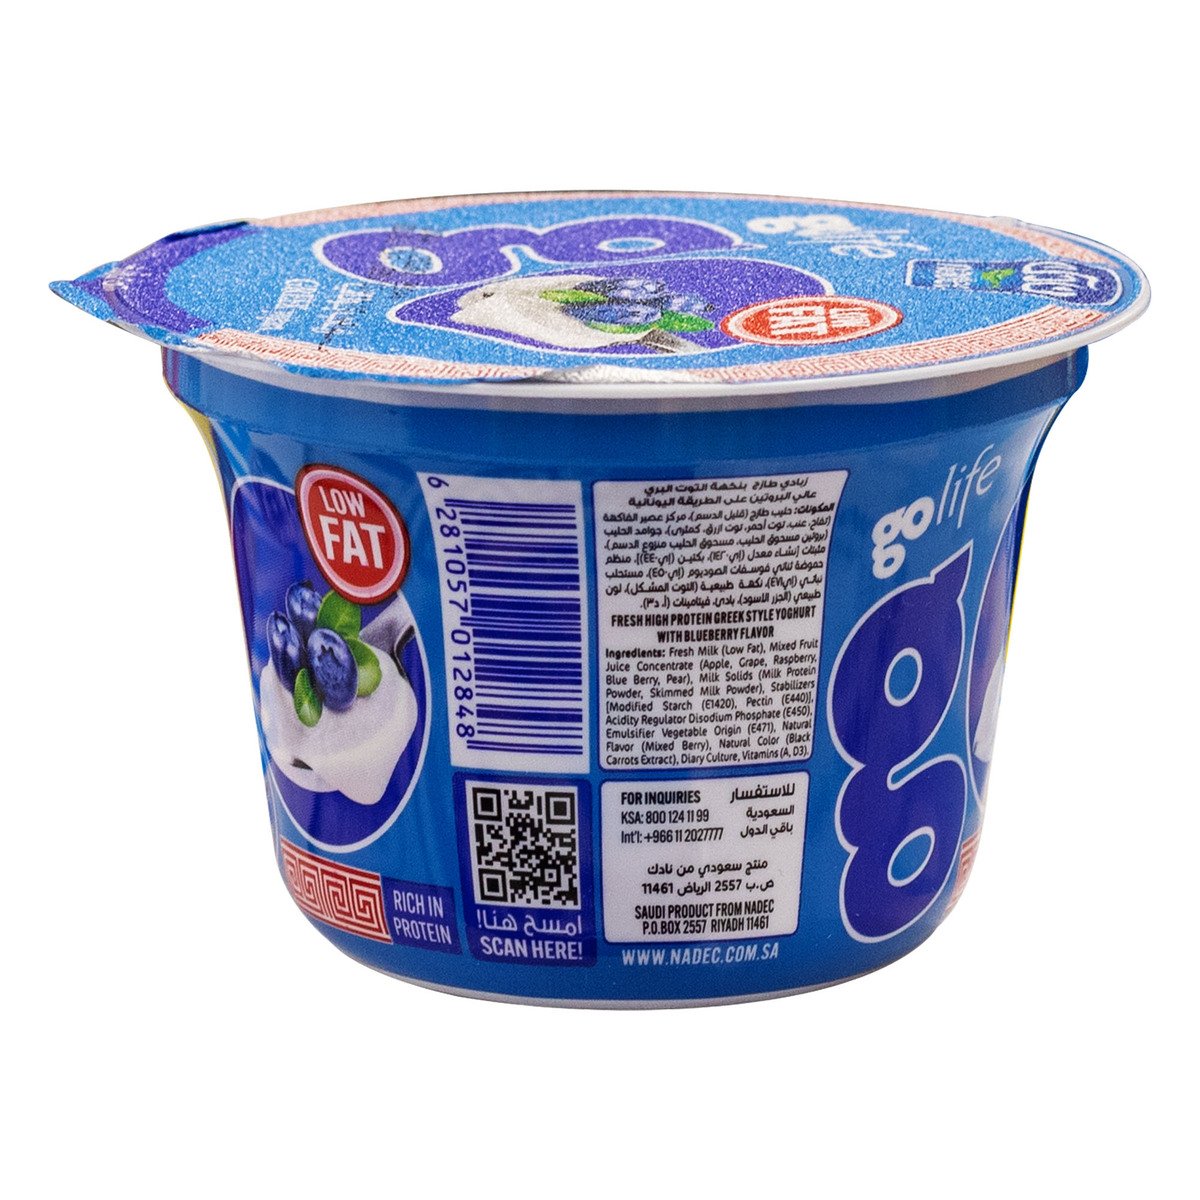 Nadec Low Fat Go Life Blueberry Greek Yoghurt 160 g